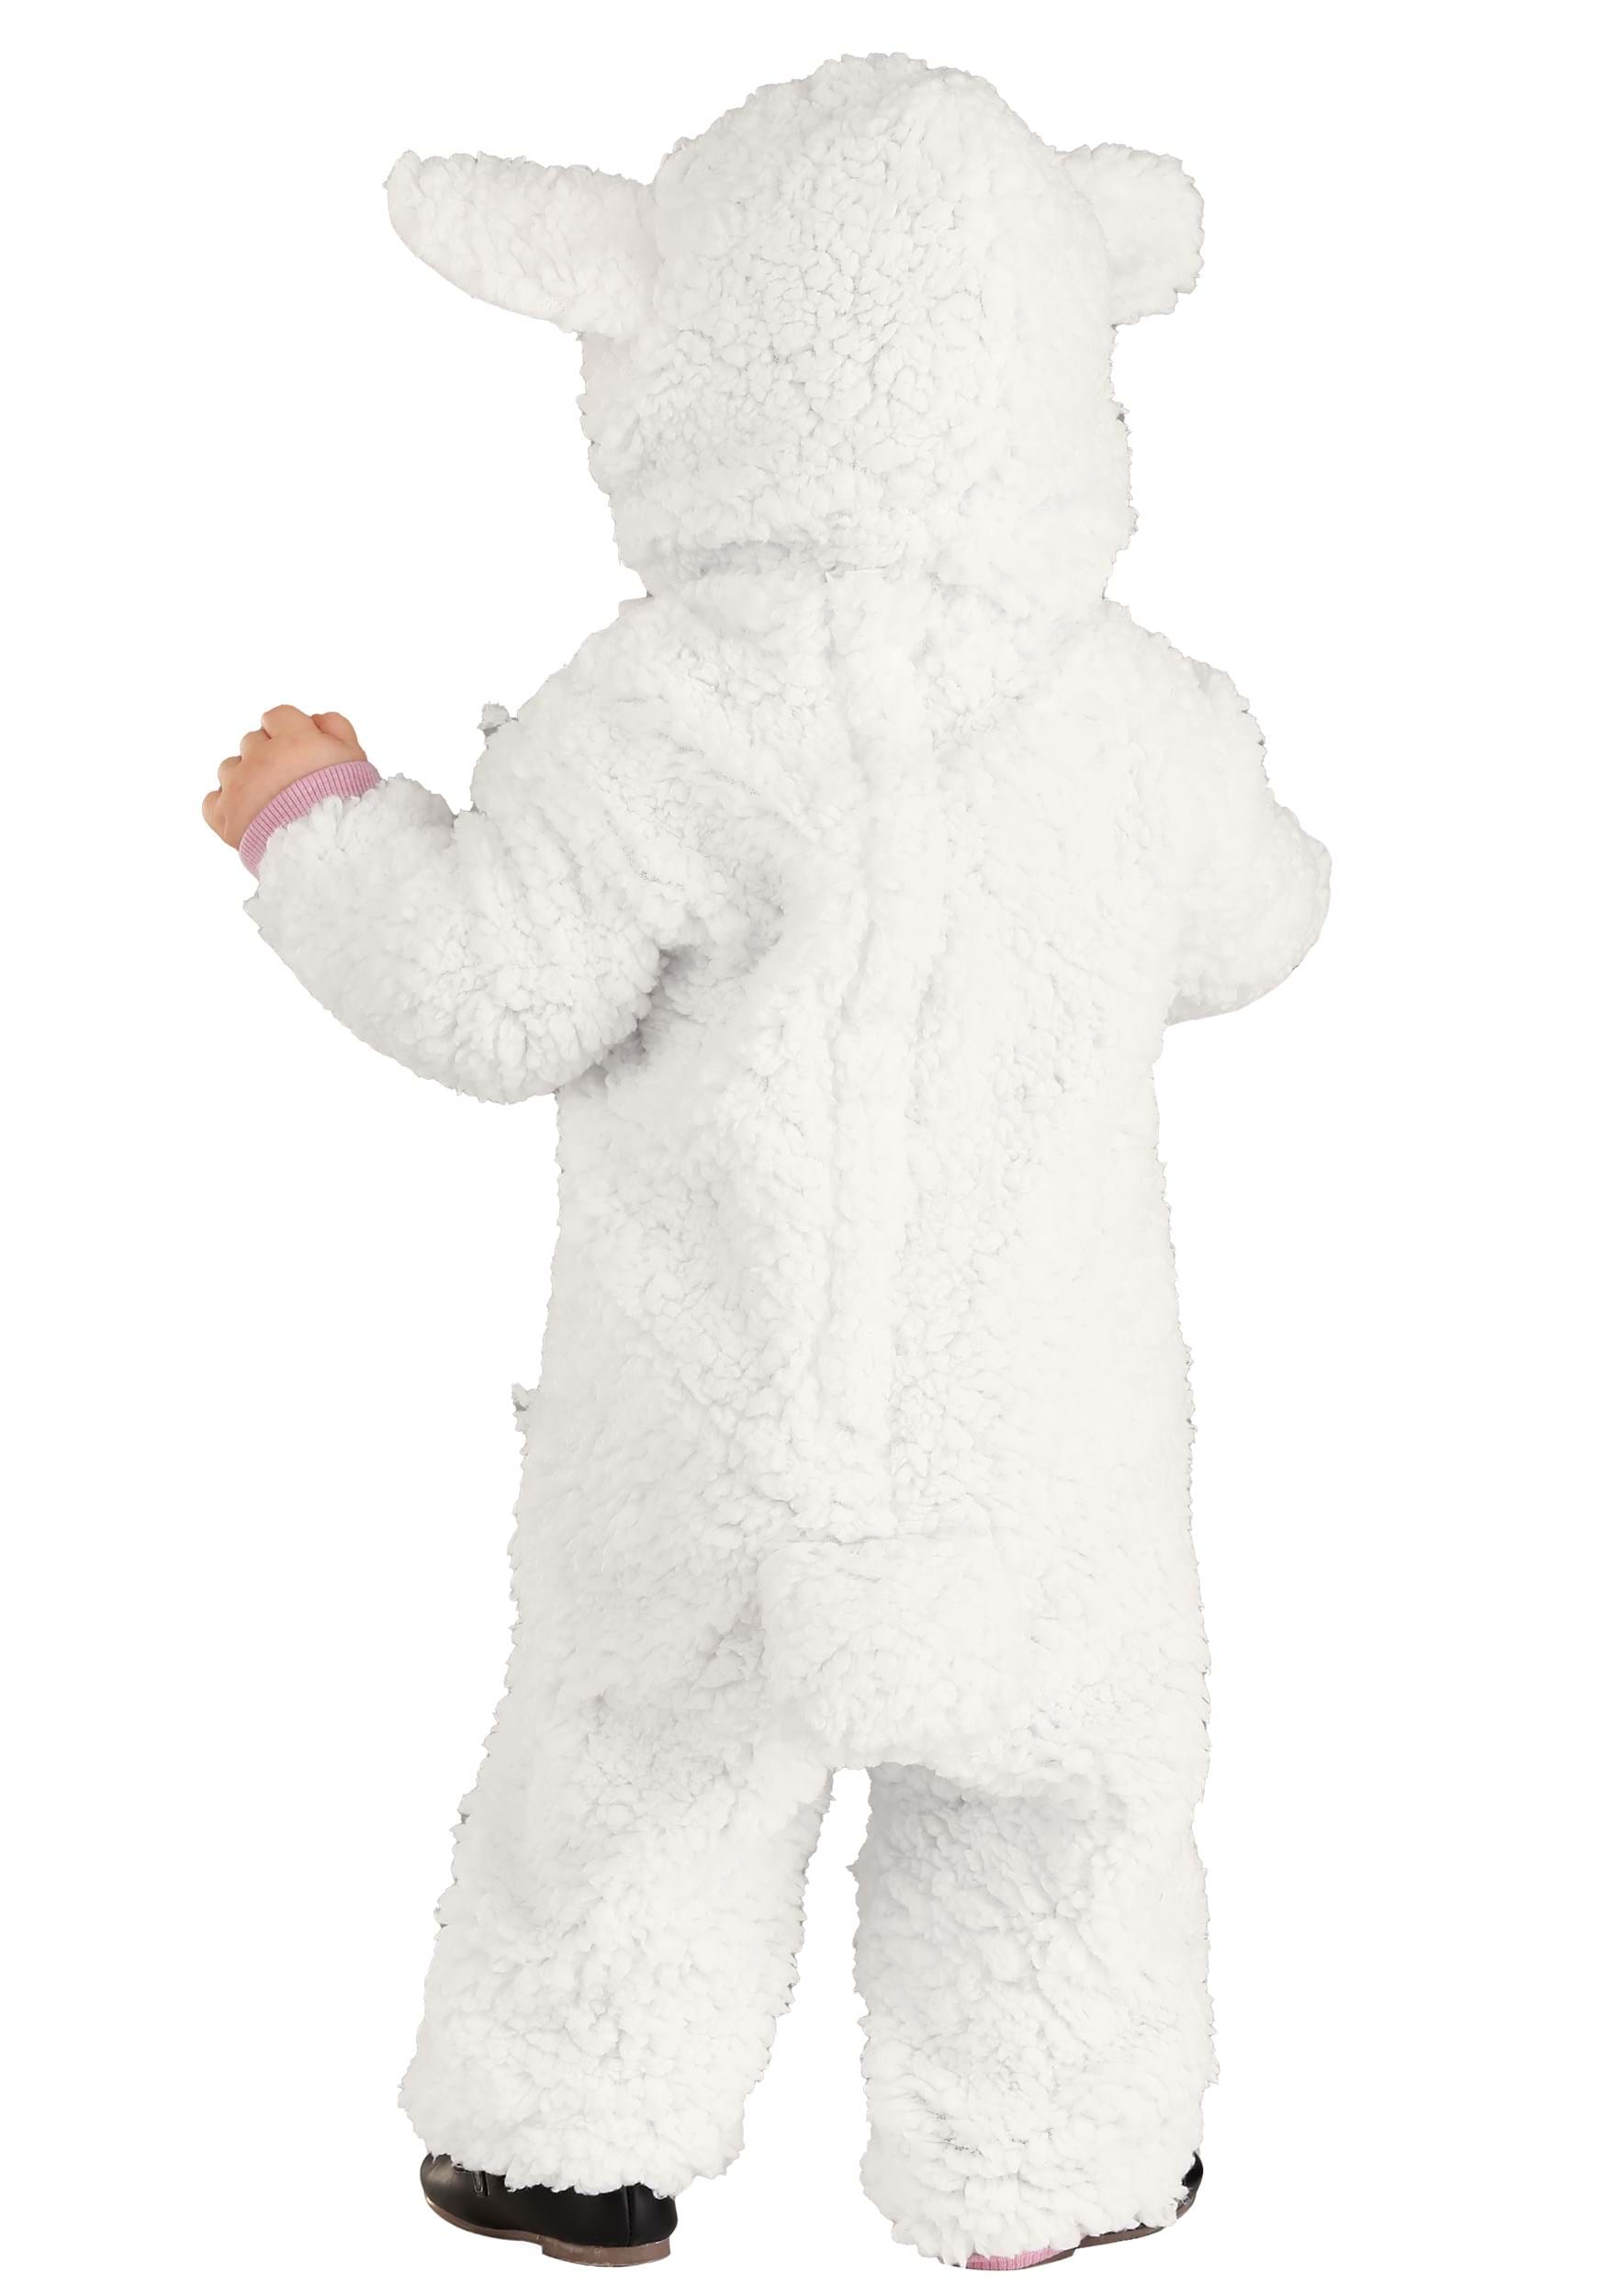 Pottery Barn Kids White Lamb 🐑 Costume